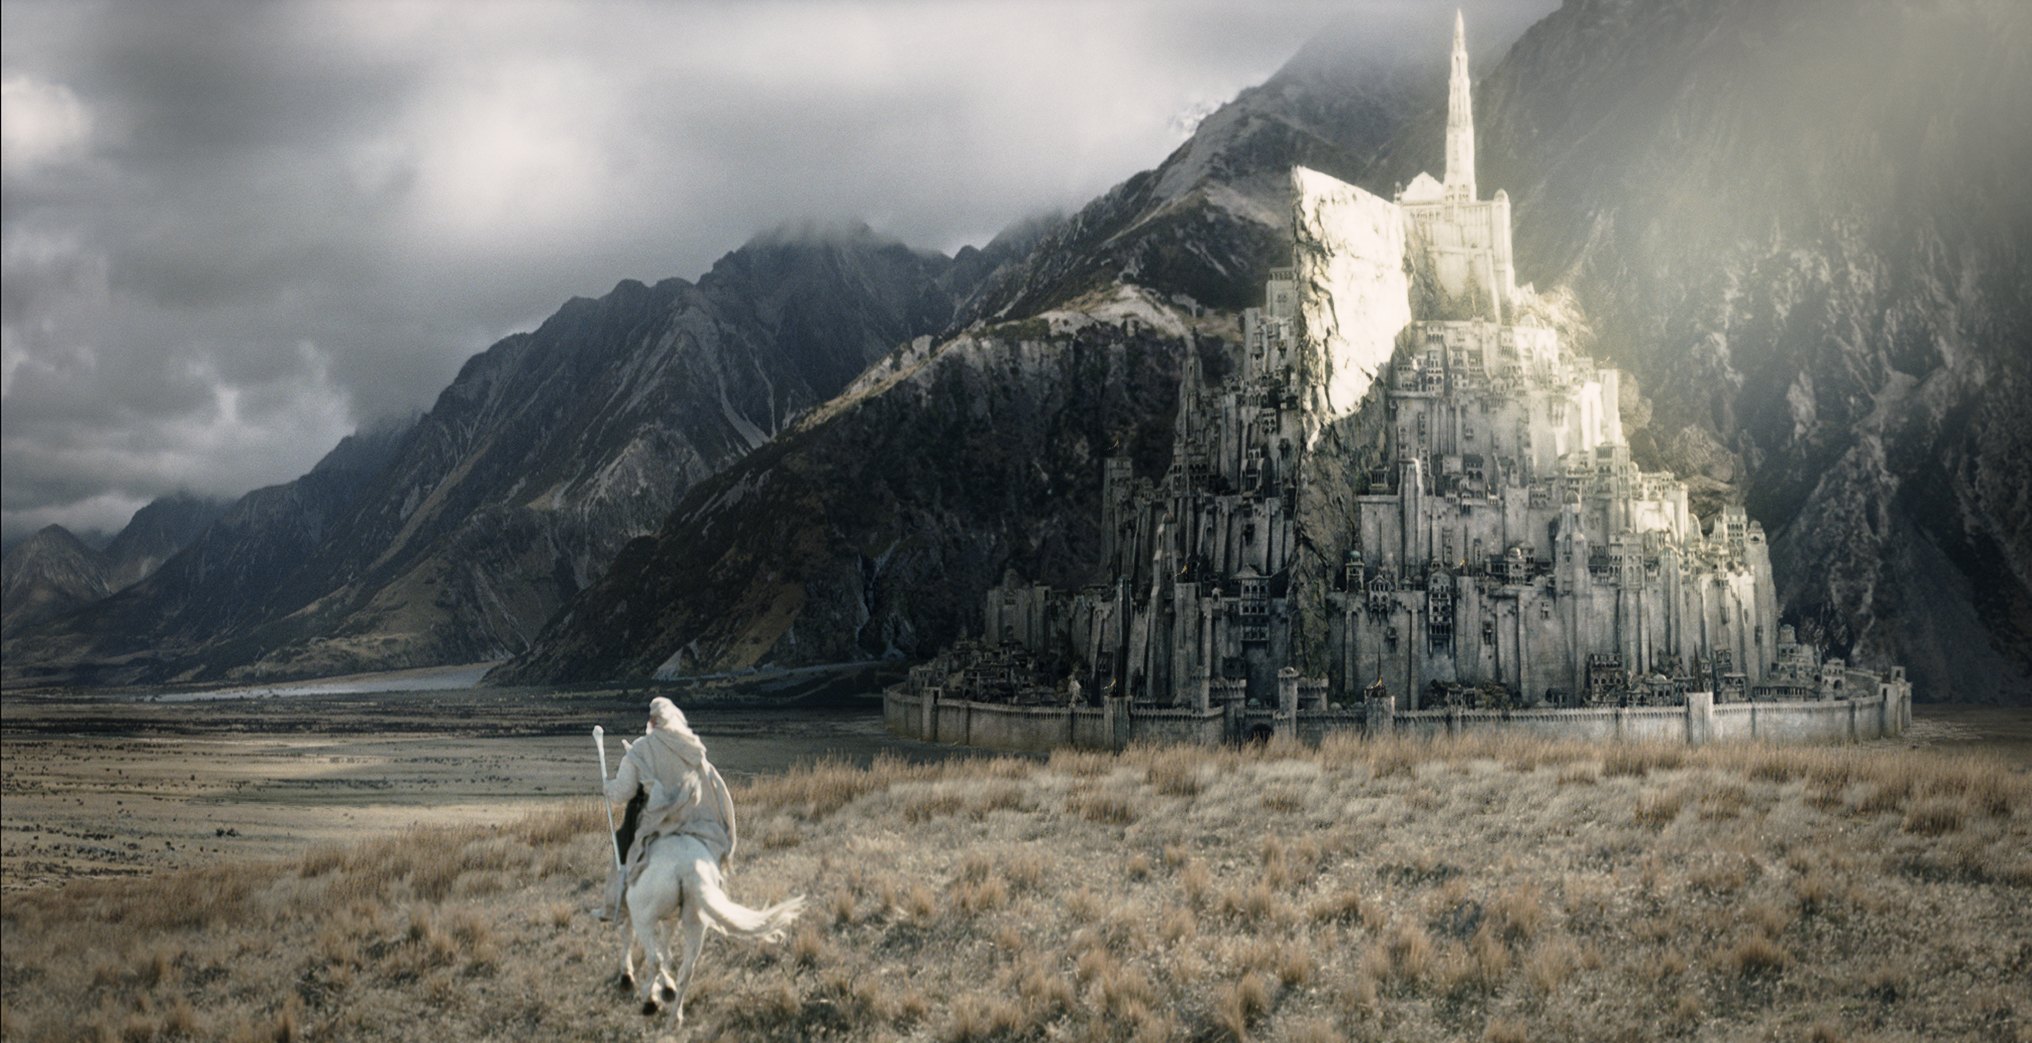 Great Gate of Minas Tirith - Tolkien Gateway